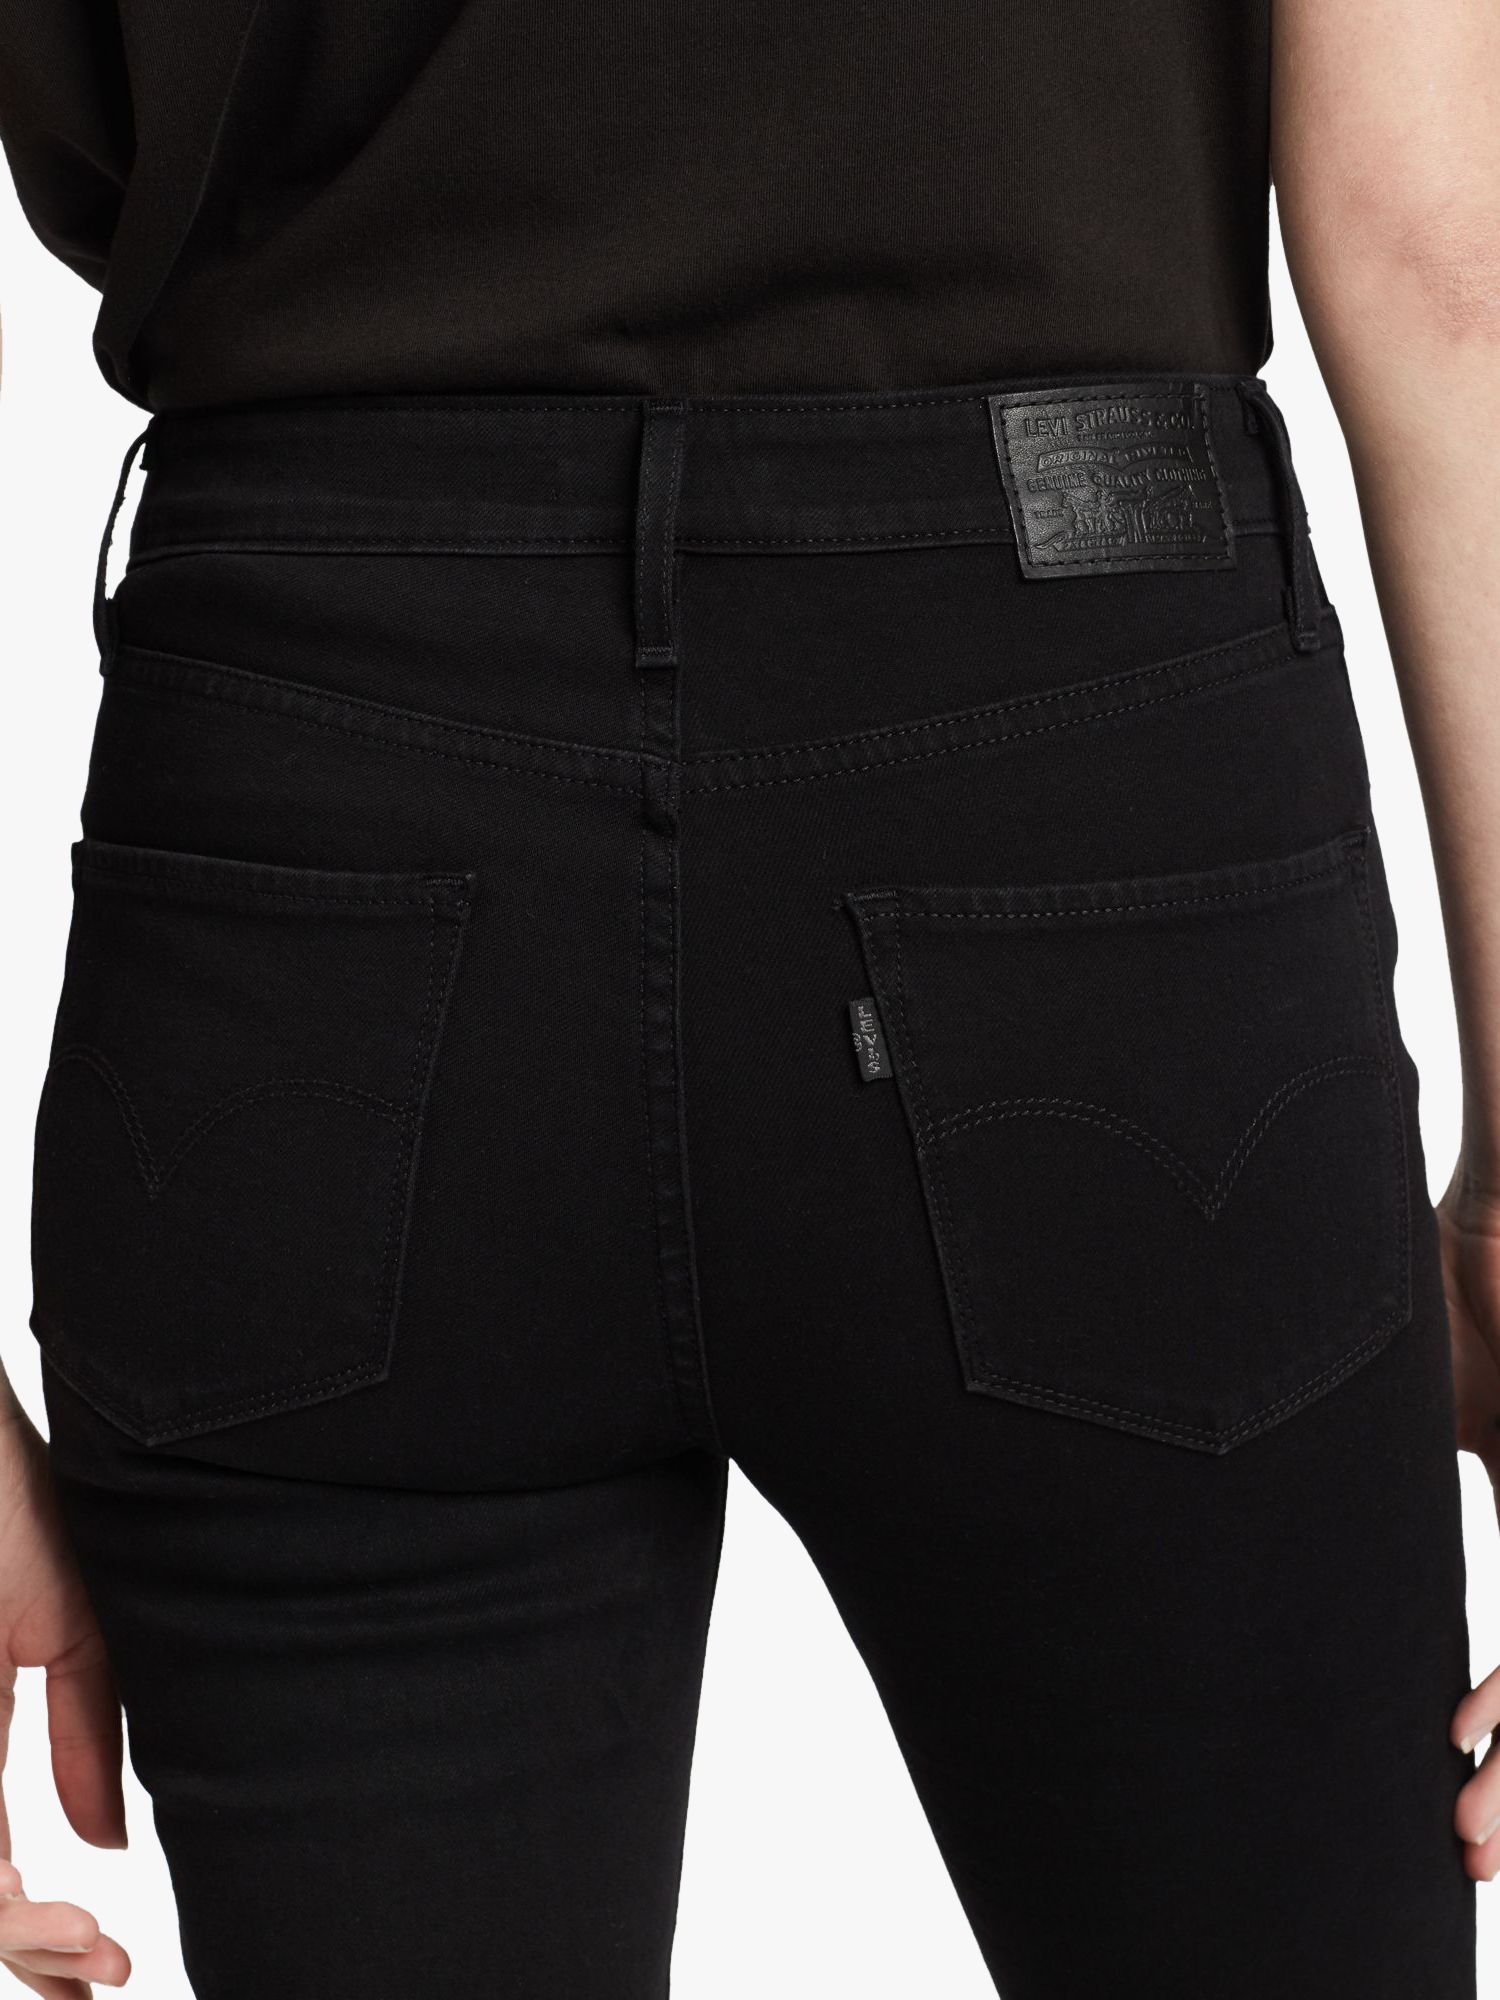 Levi's 721 High Rise Skinny Jeans, Long Shot Black at John Lewis & Partners